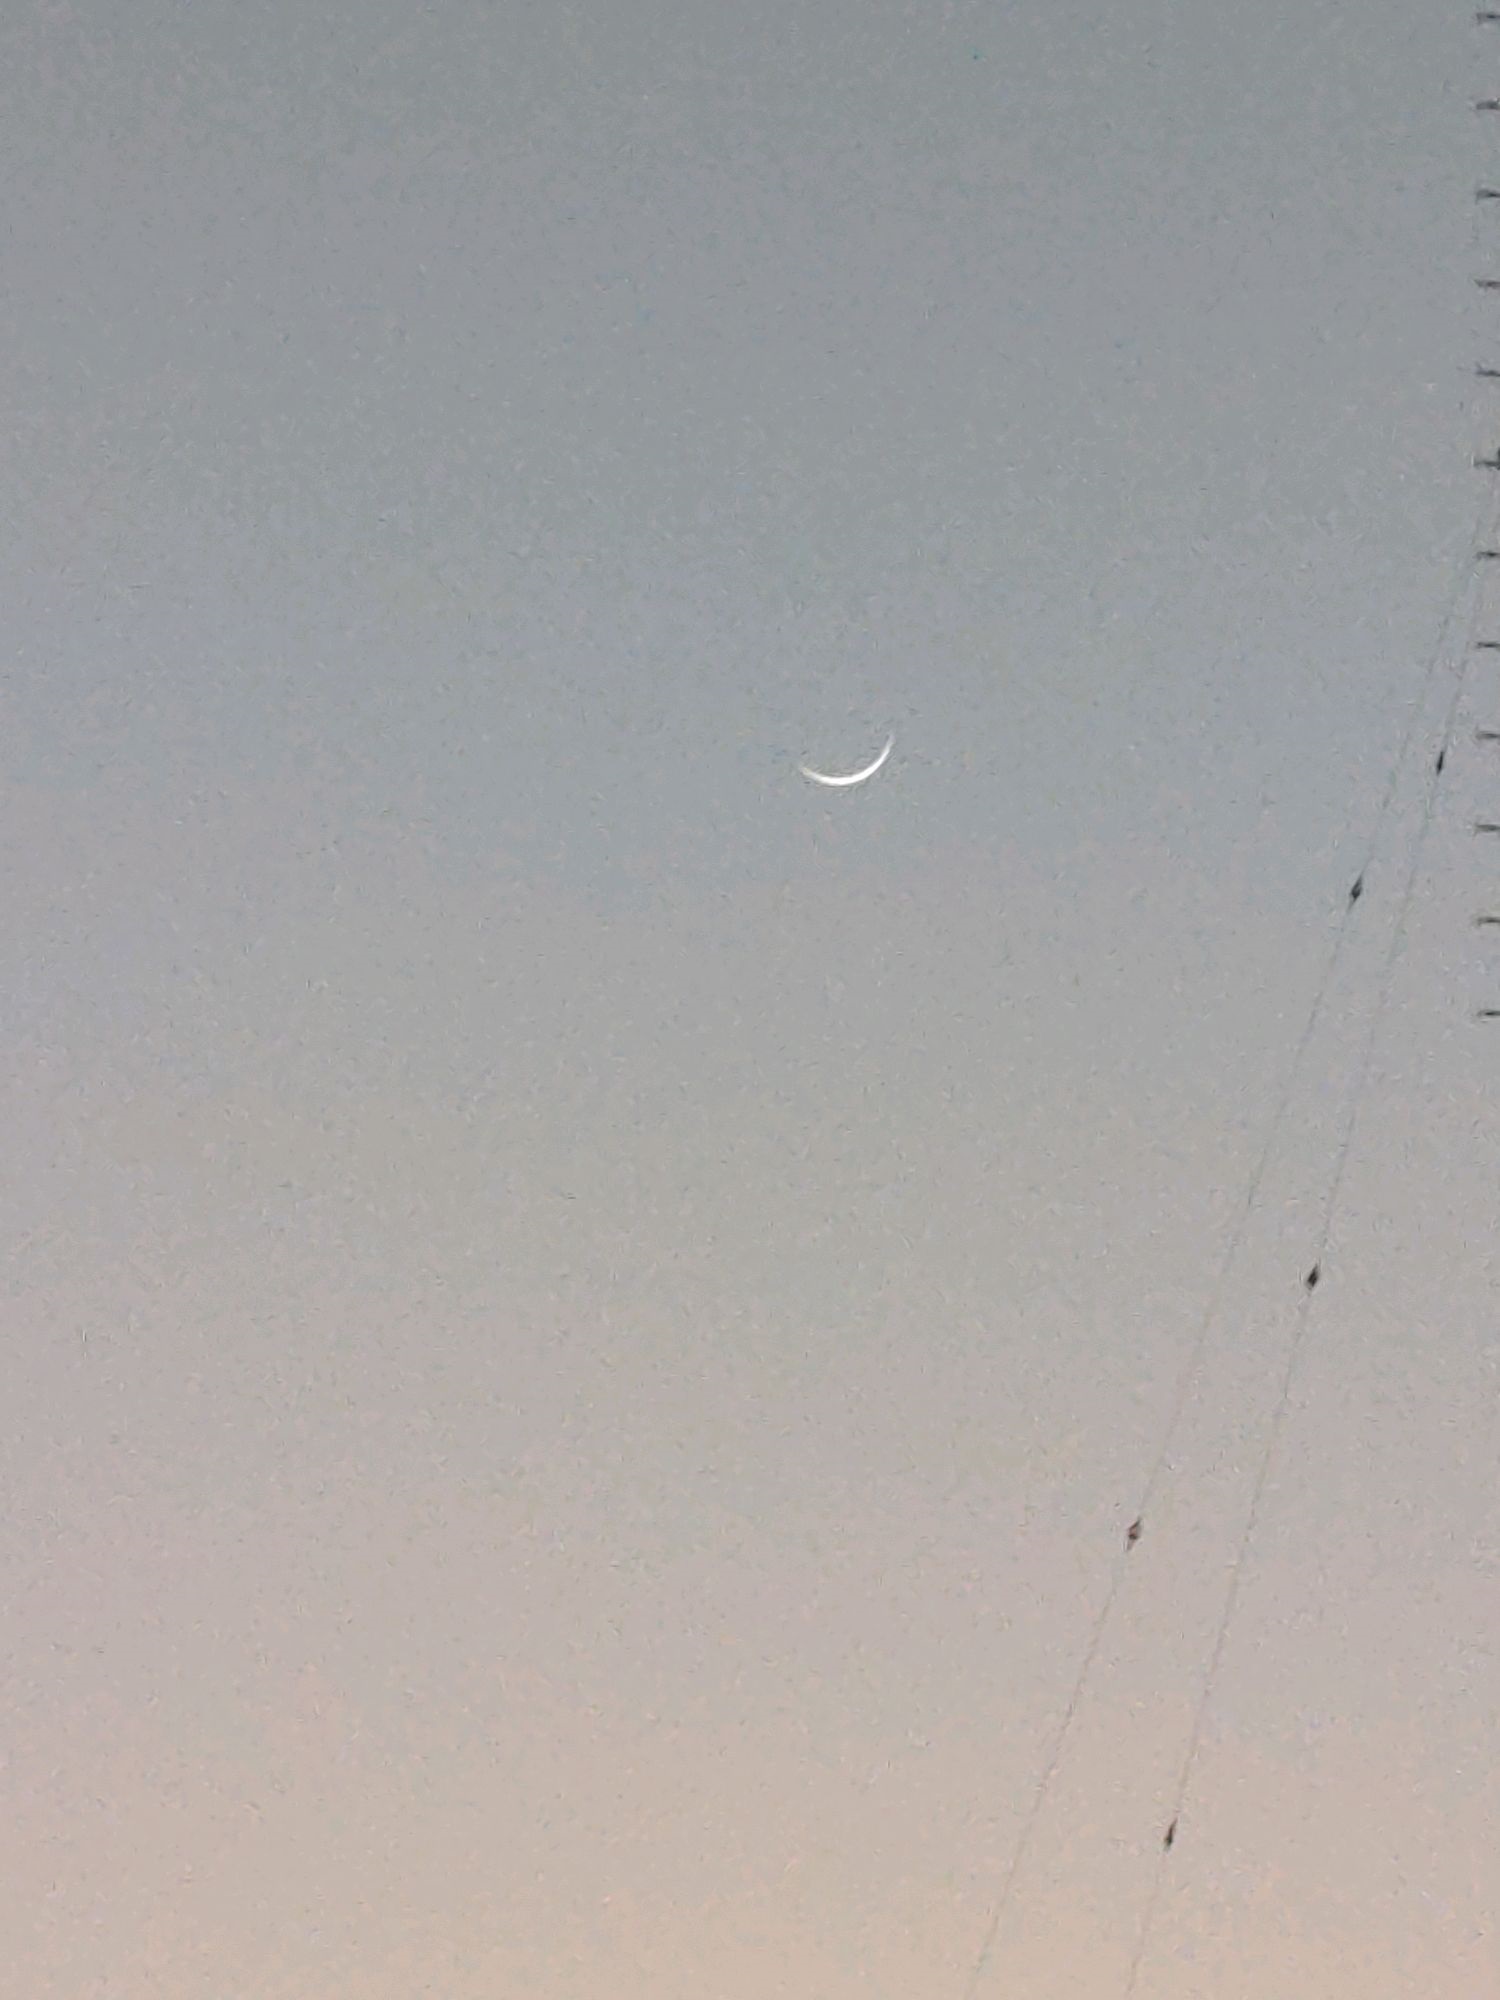 San Antonio New Moon Sighting 2023-02-21